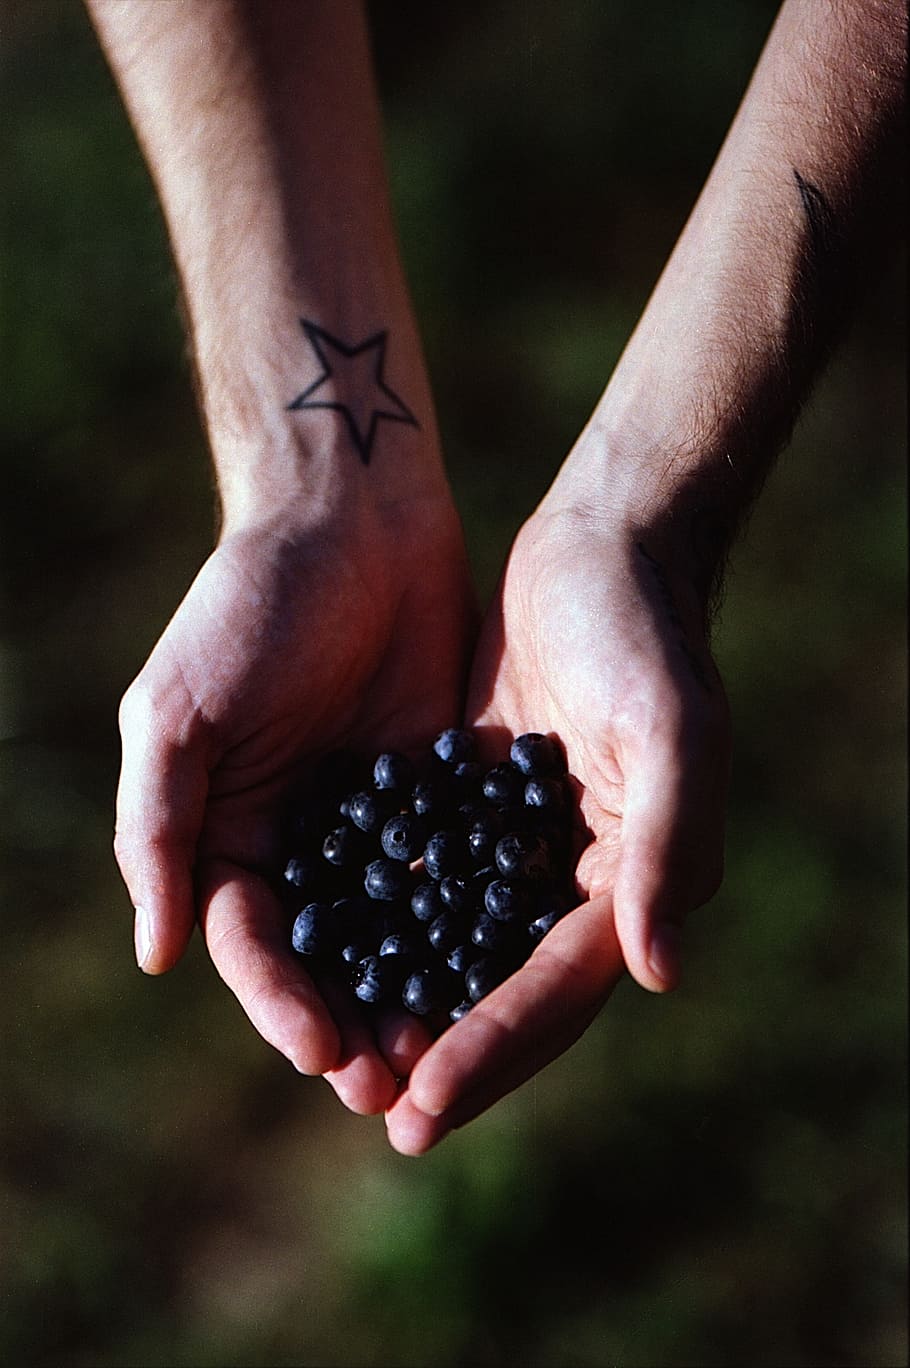 berries, black, fruits, green, hands, men, human hand, food and drink, hand, food